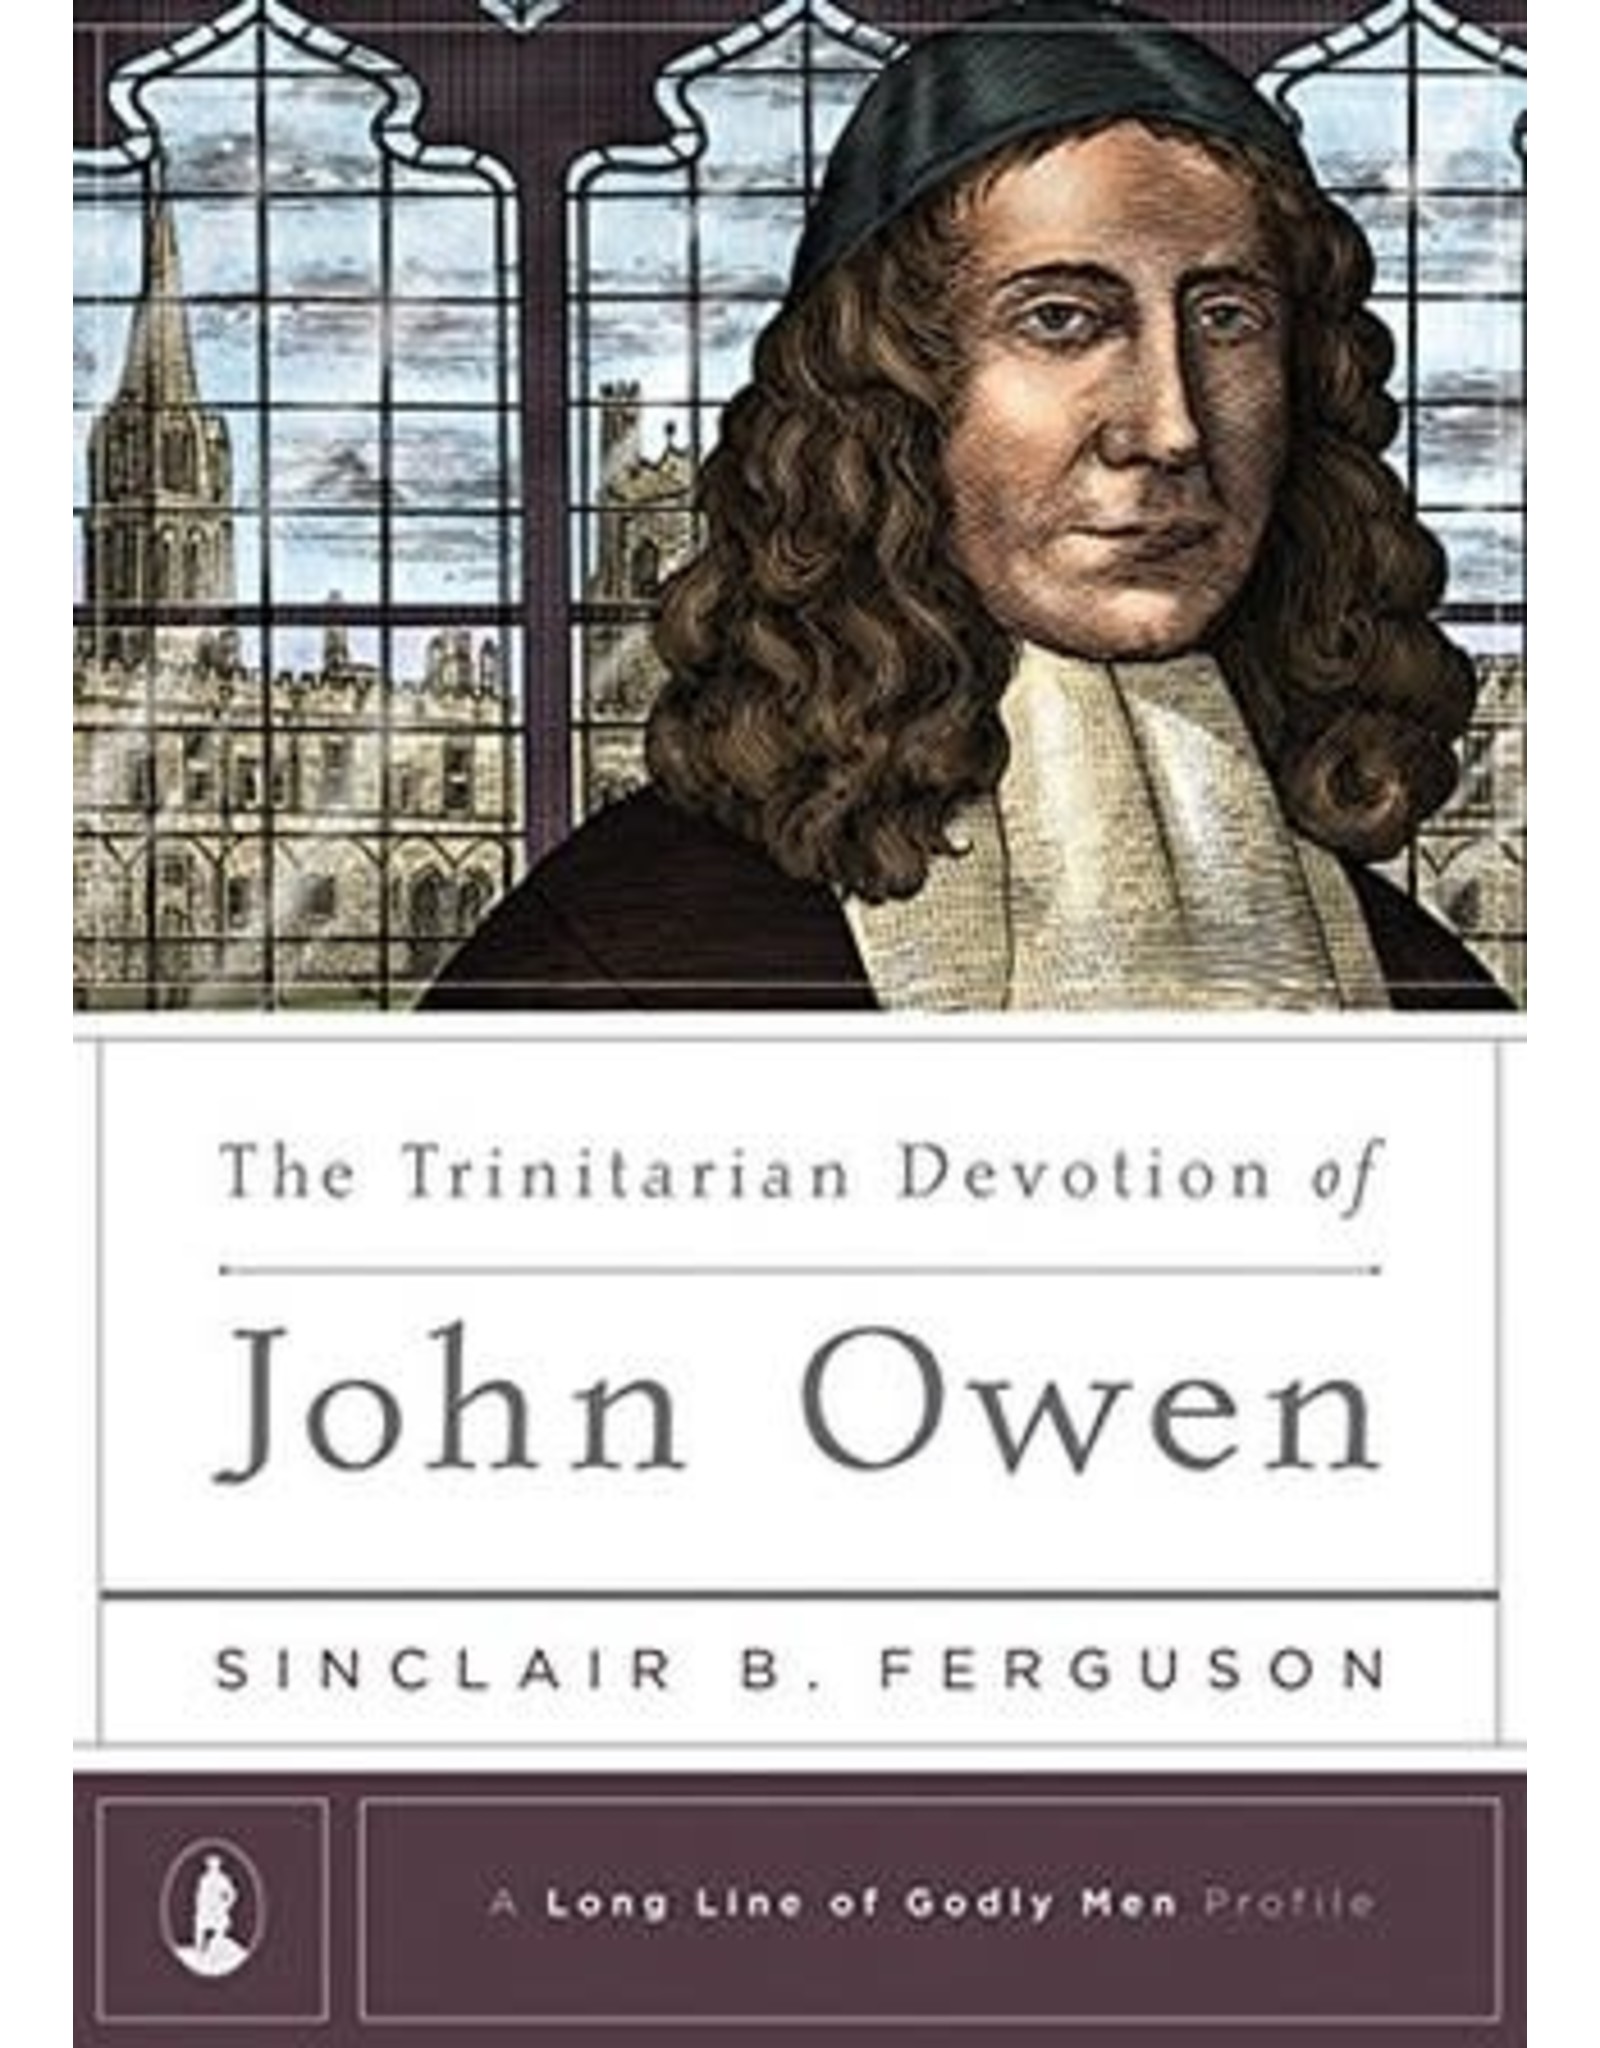 Sinclair B Ferguson The Trinitarian Devotion of John Owen - A Long line of Godly Men